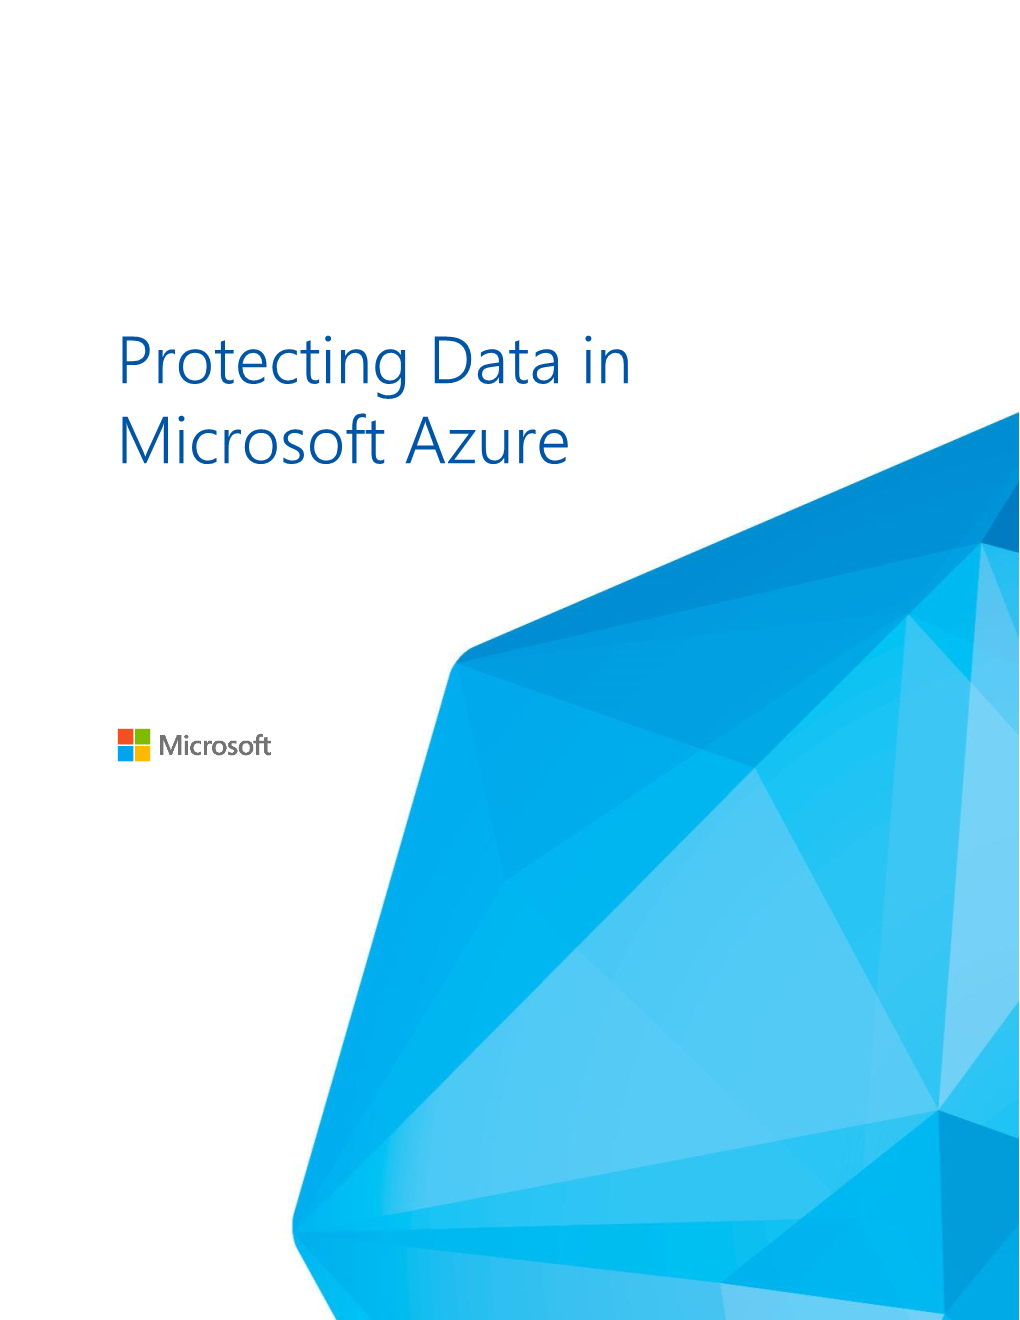 Protecting Data in Microsoft Azure